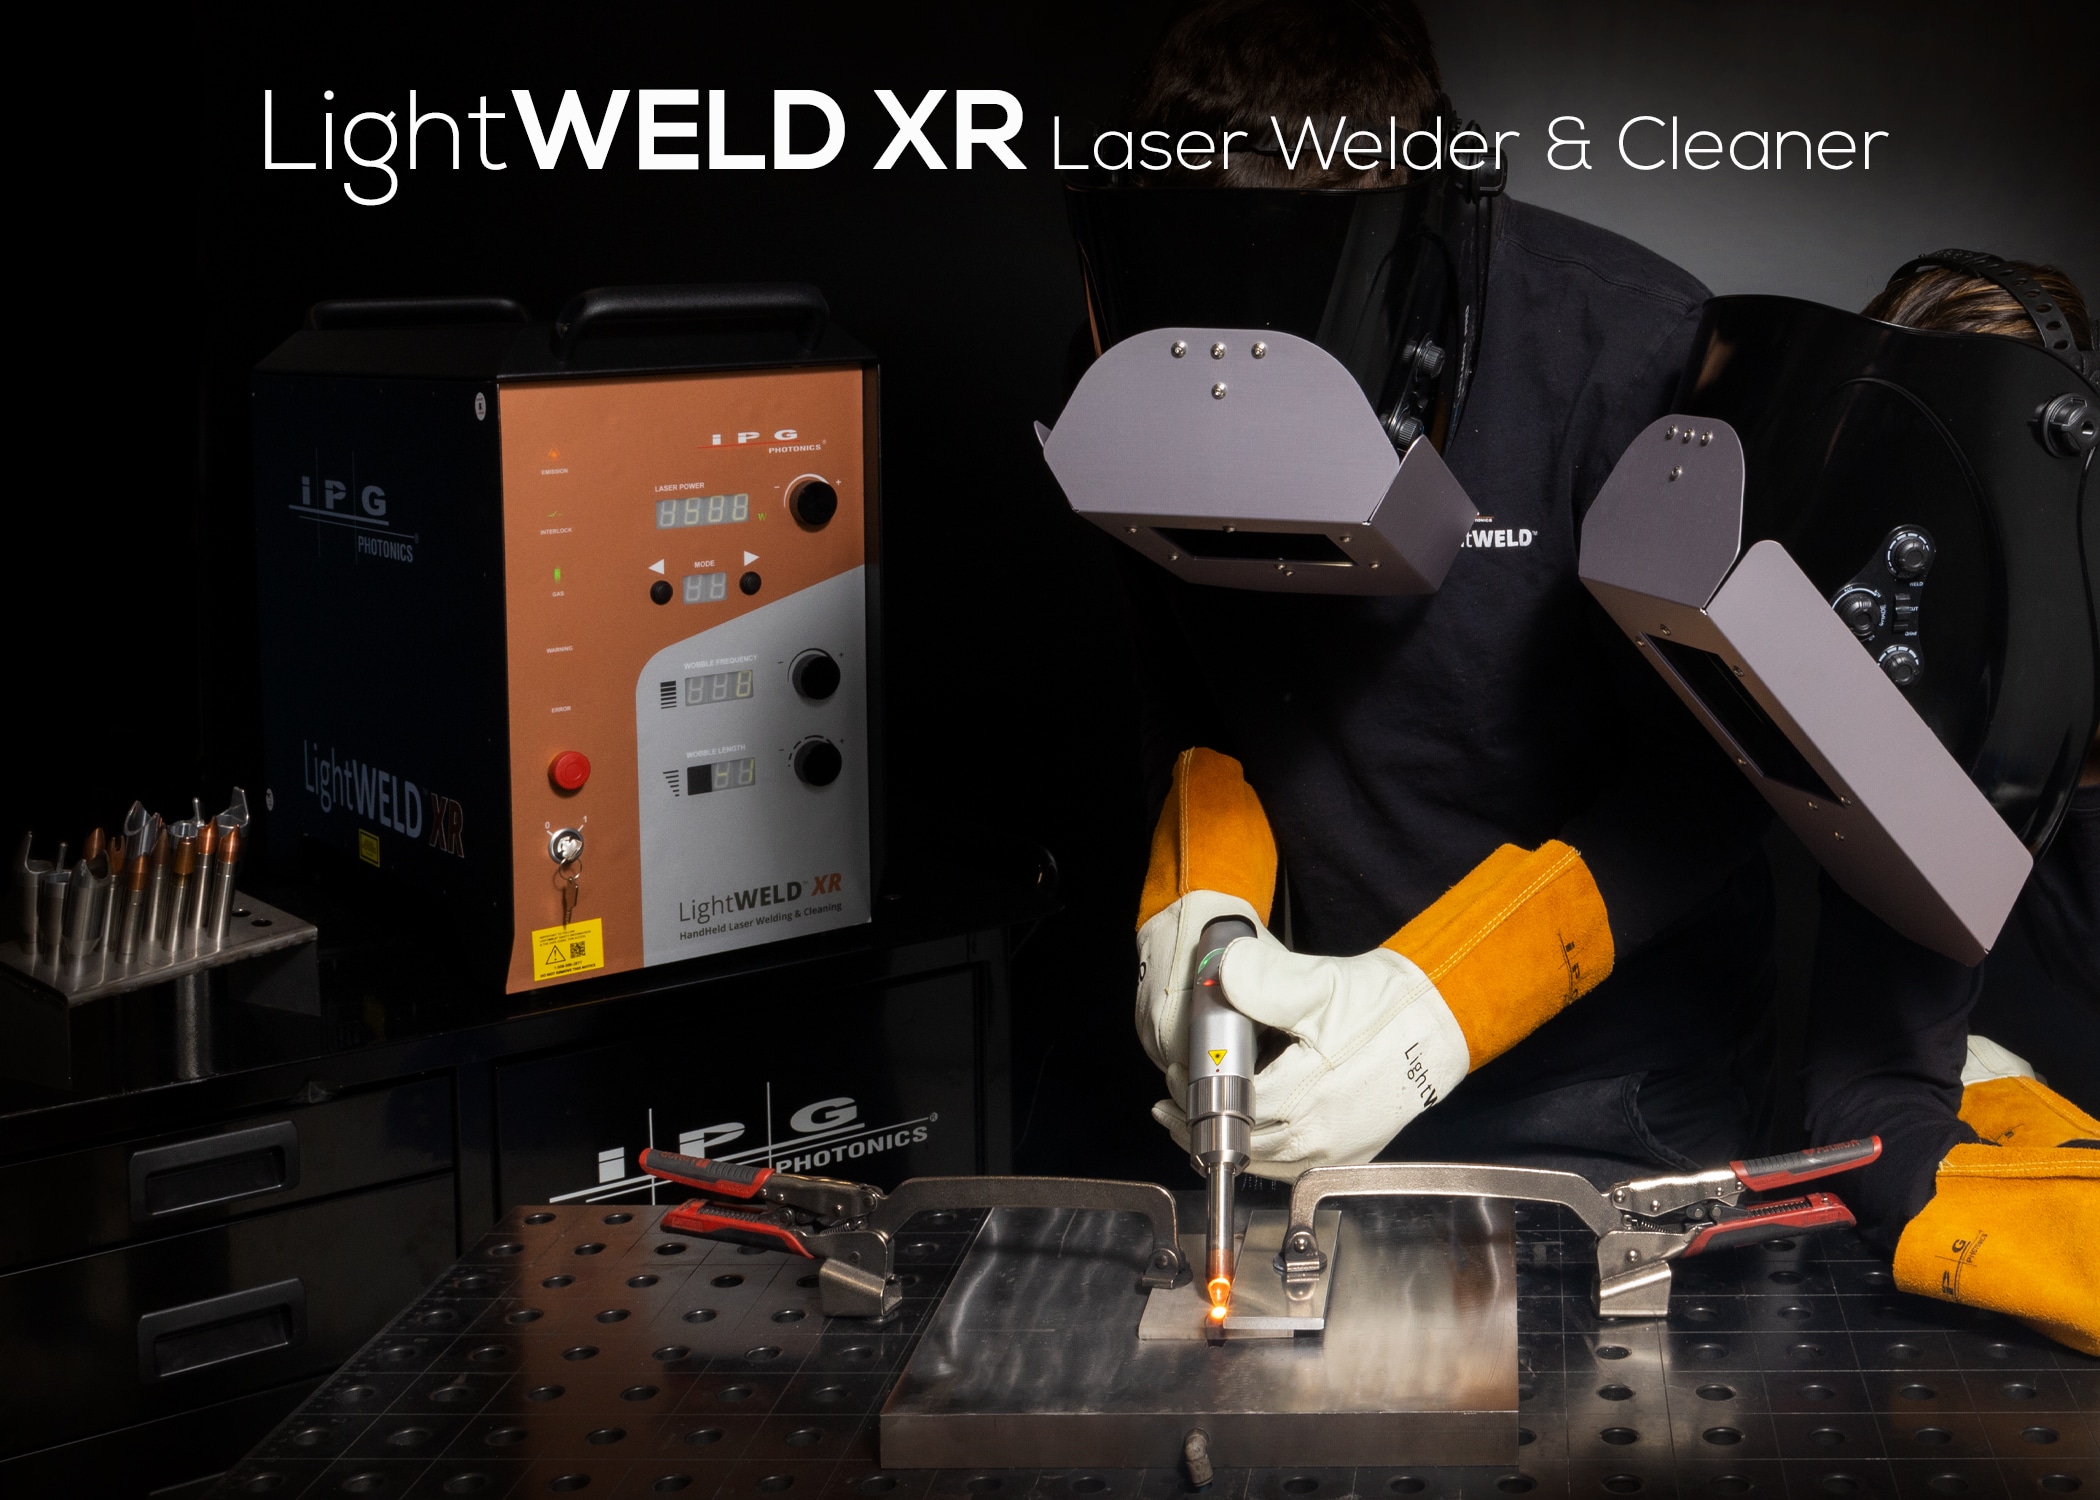 Overview of RMT’s LightWELD XR Laser Welder